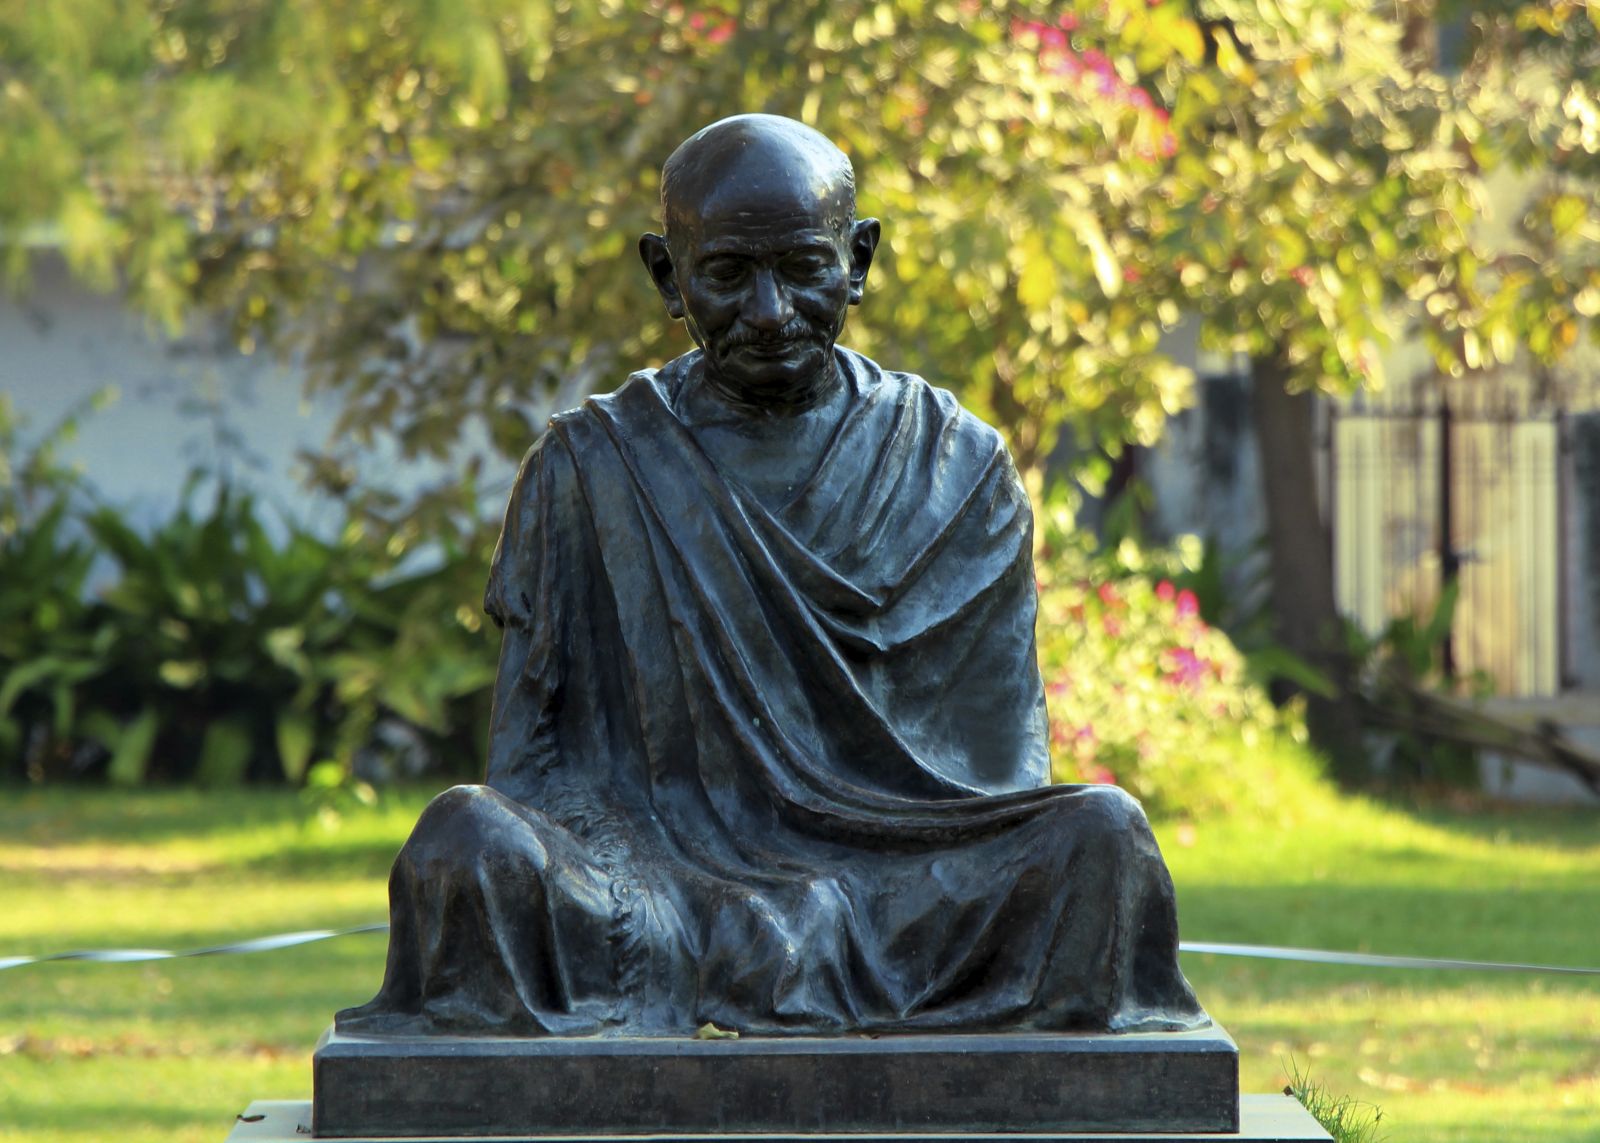 Nonviolent communication draws on Gandhian principles of nonviolence.